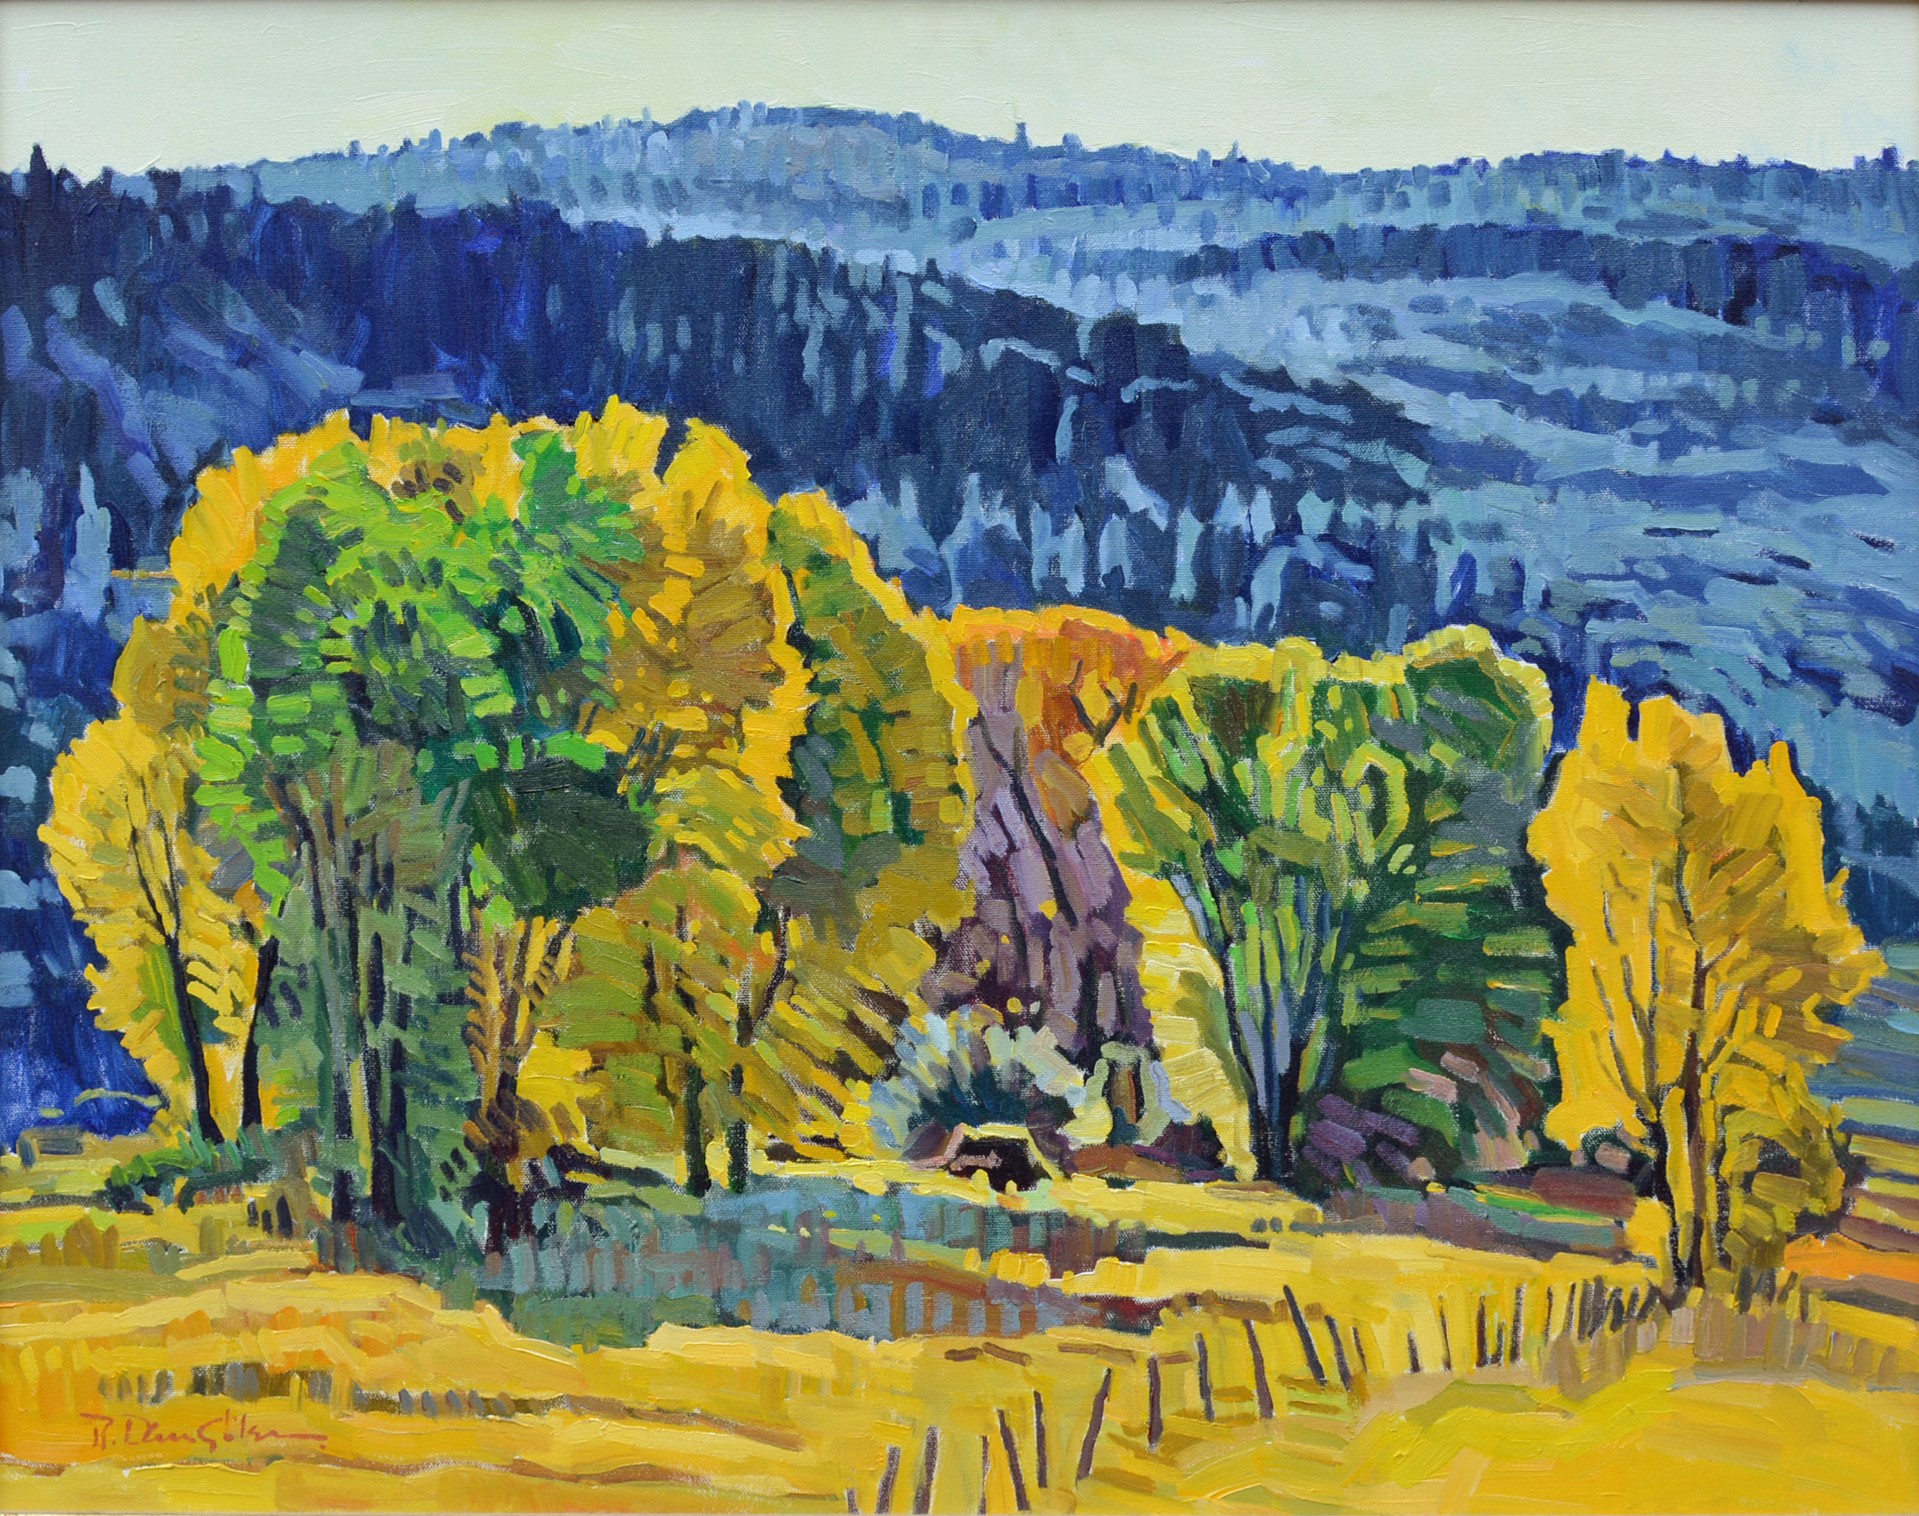 Costilla Valley by Robert Daughters (1929-2013)